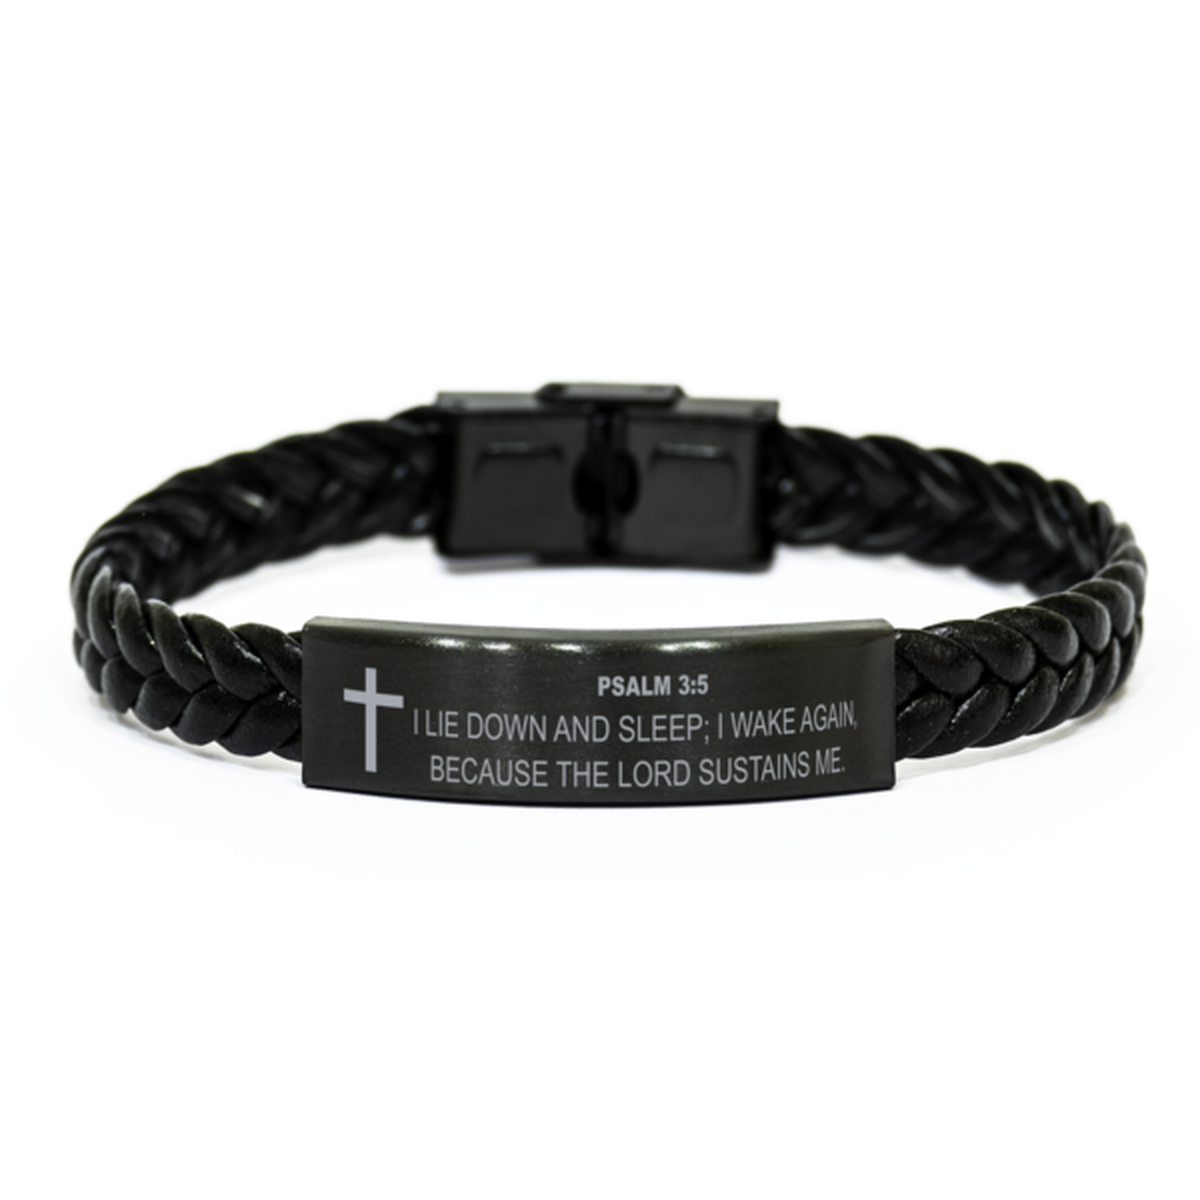 Psalm 3:5 Bracelet, The Lord Sustains Me, Bible Verse Bracelet, Christian Bracelet, Braided Leather Bracelet, Easter Gift